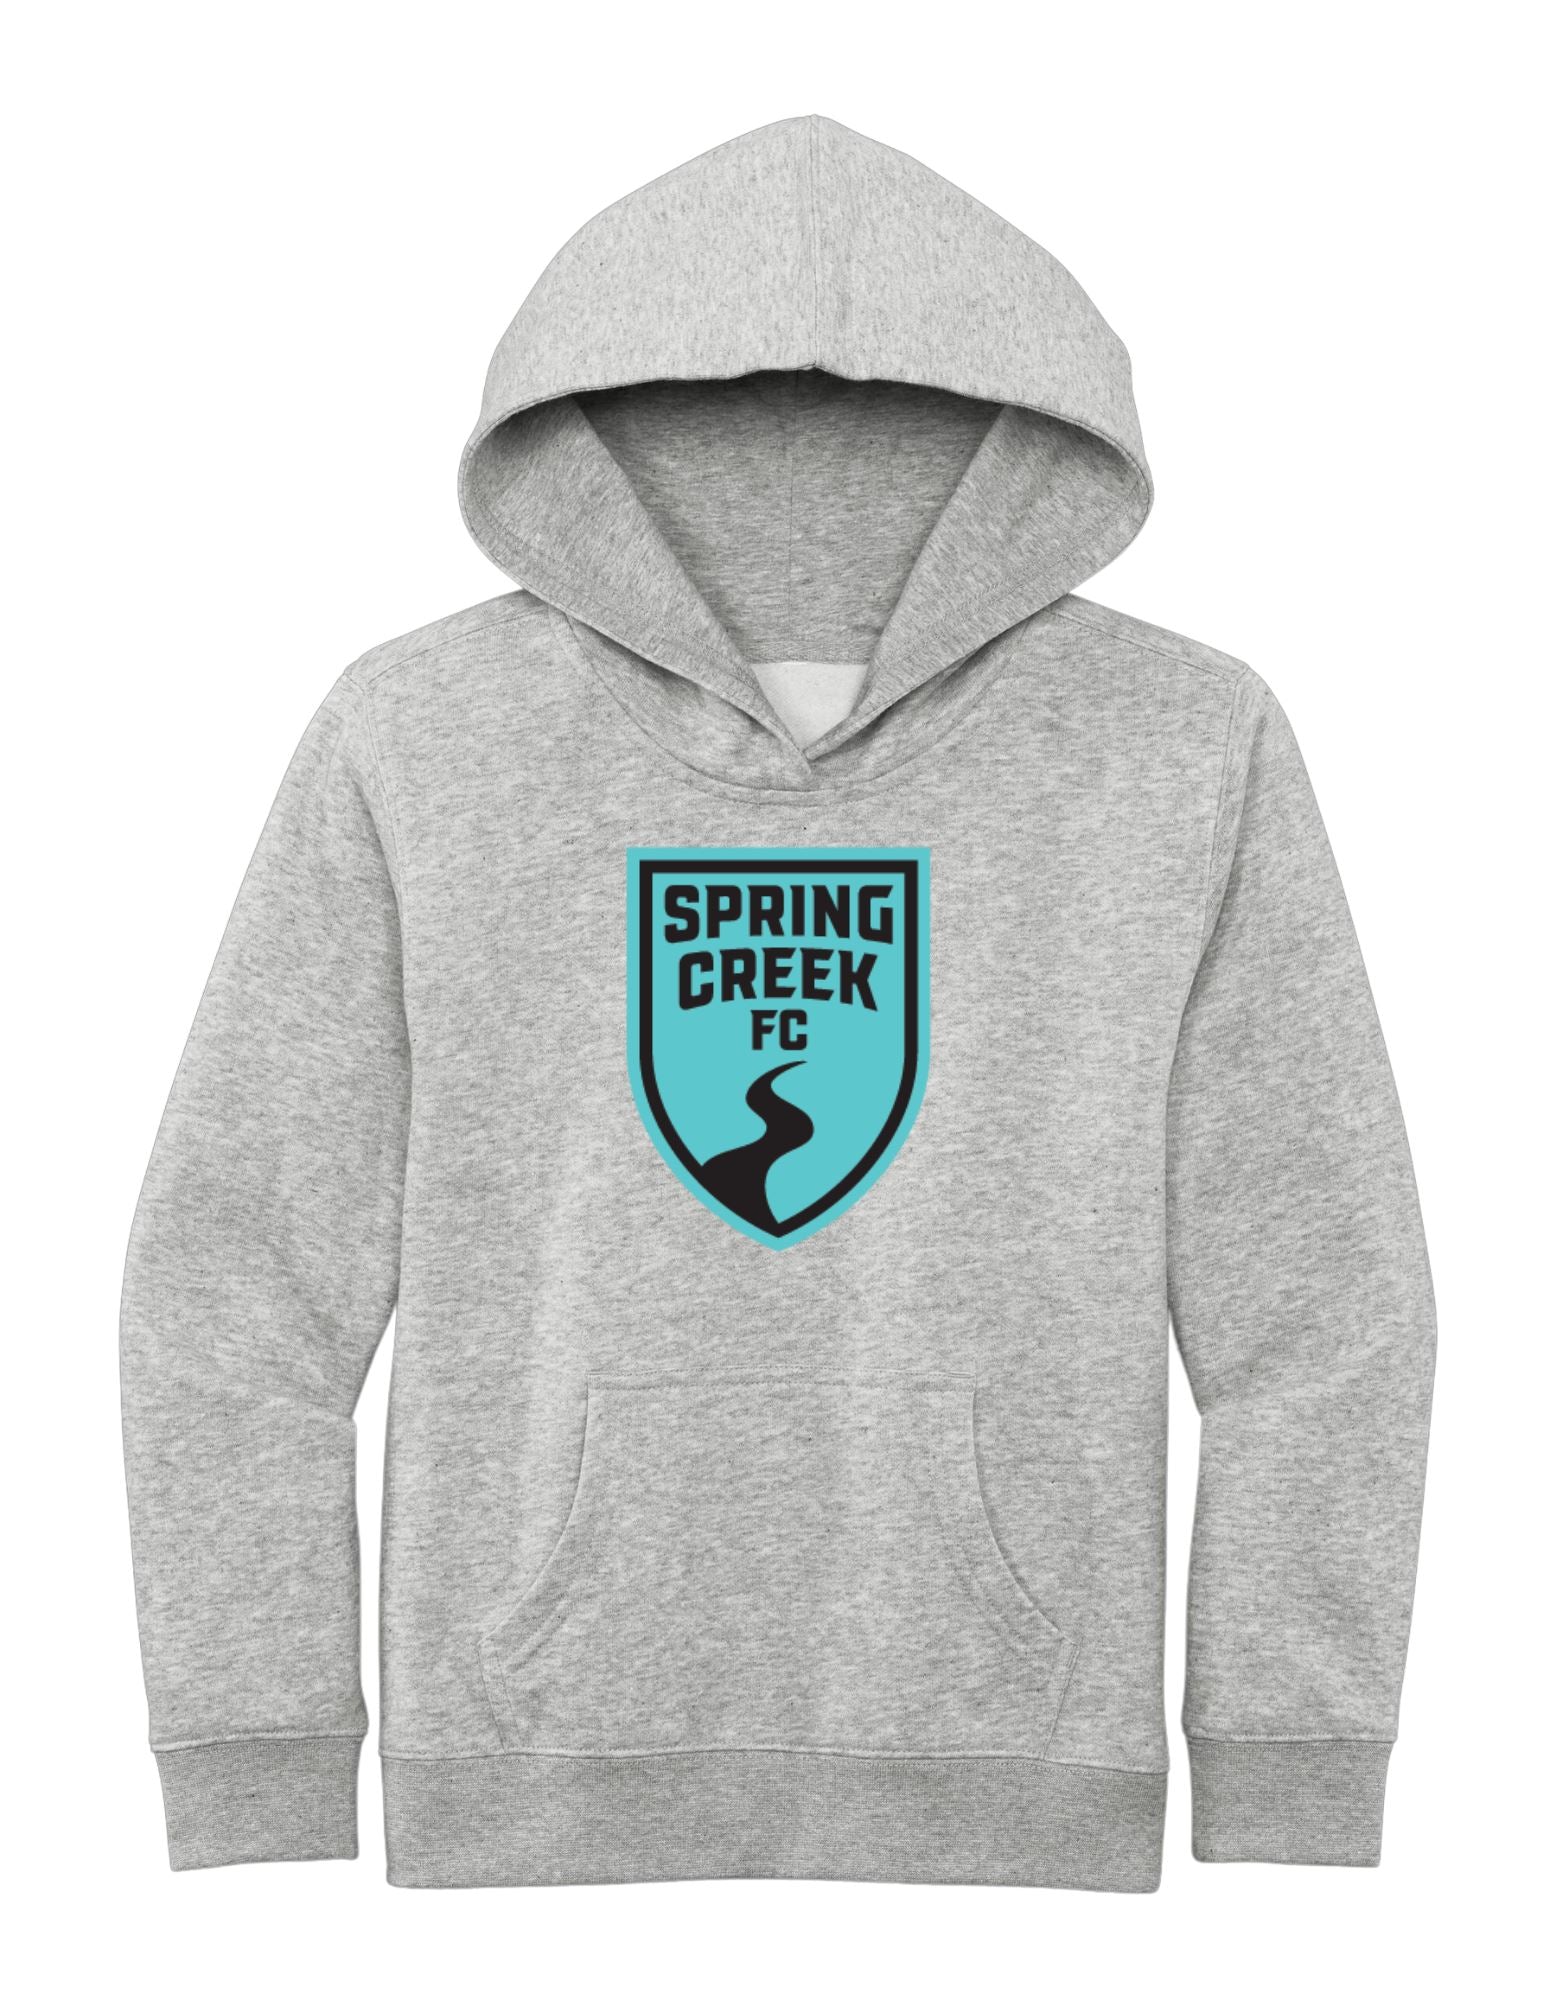 Spring Creek FC | Youth Hooded Sweatshirt Goal Kick Soccer Heathered Grey Youth Small 